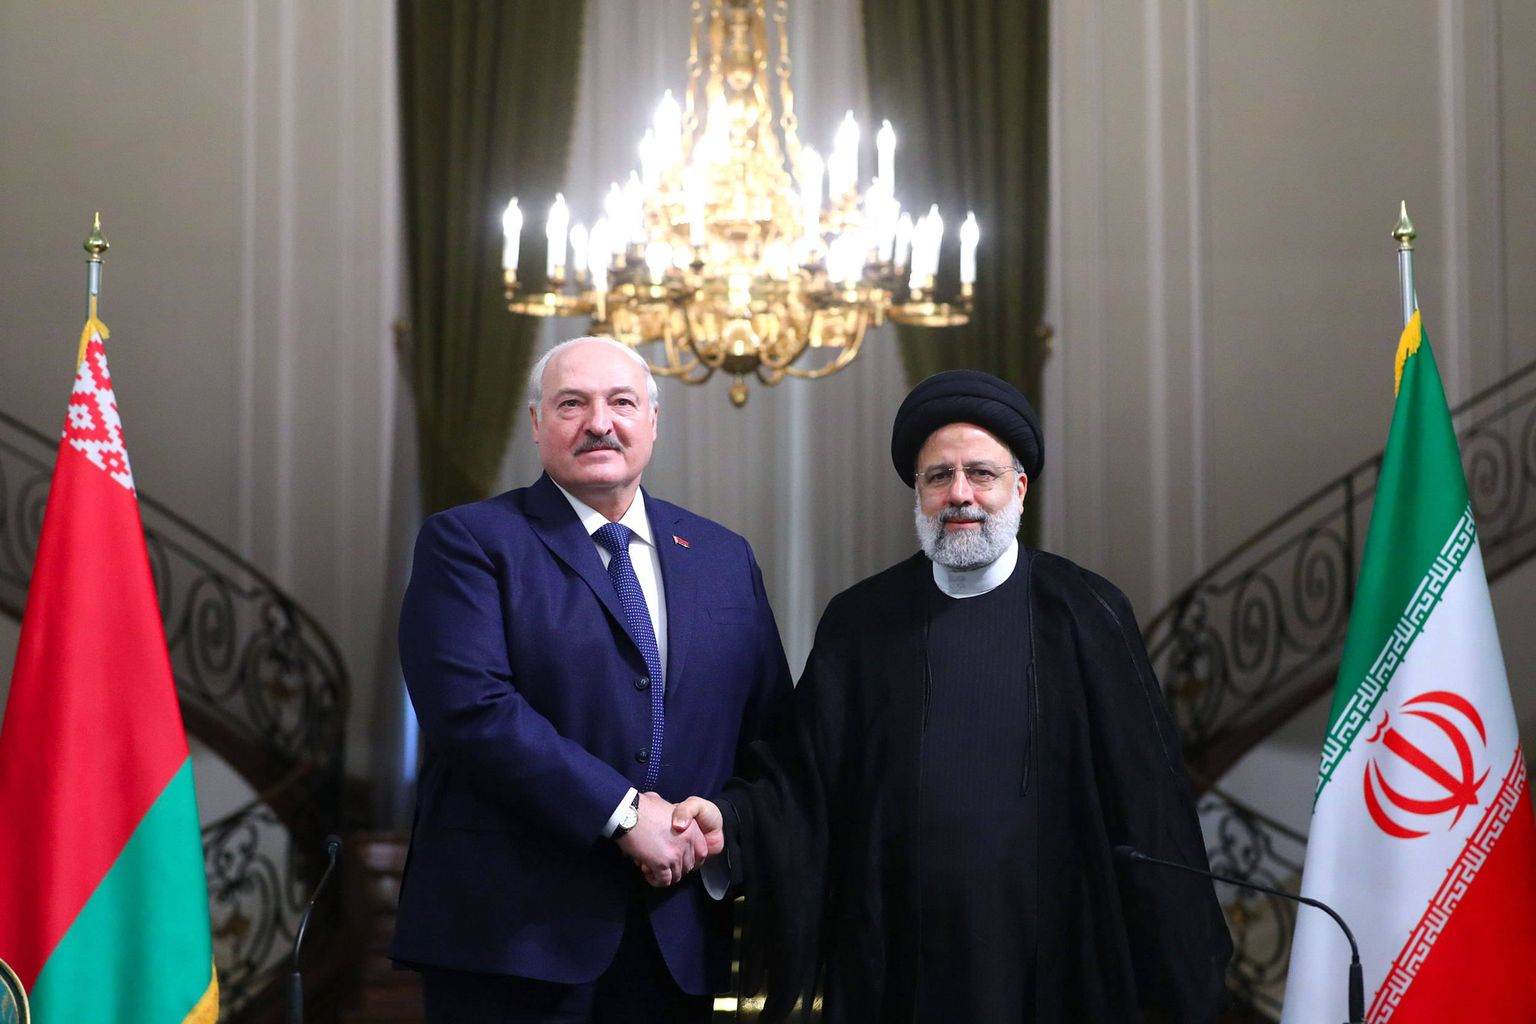 Iraani presidendi Ebrahim Raisi käepigistus Aljaksandr Lukašenkaga. Kohtumine toimus Teheranis 13. märtsil 2023.